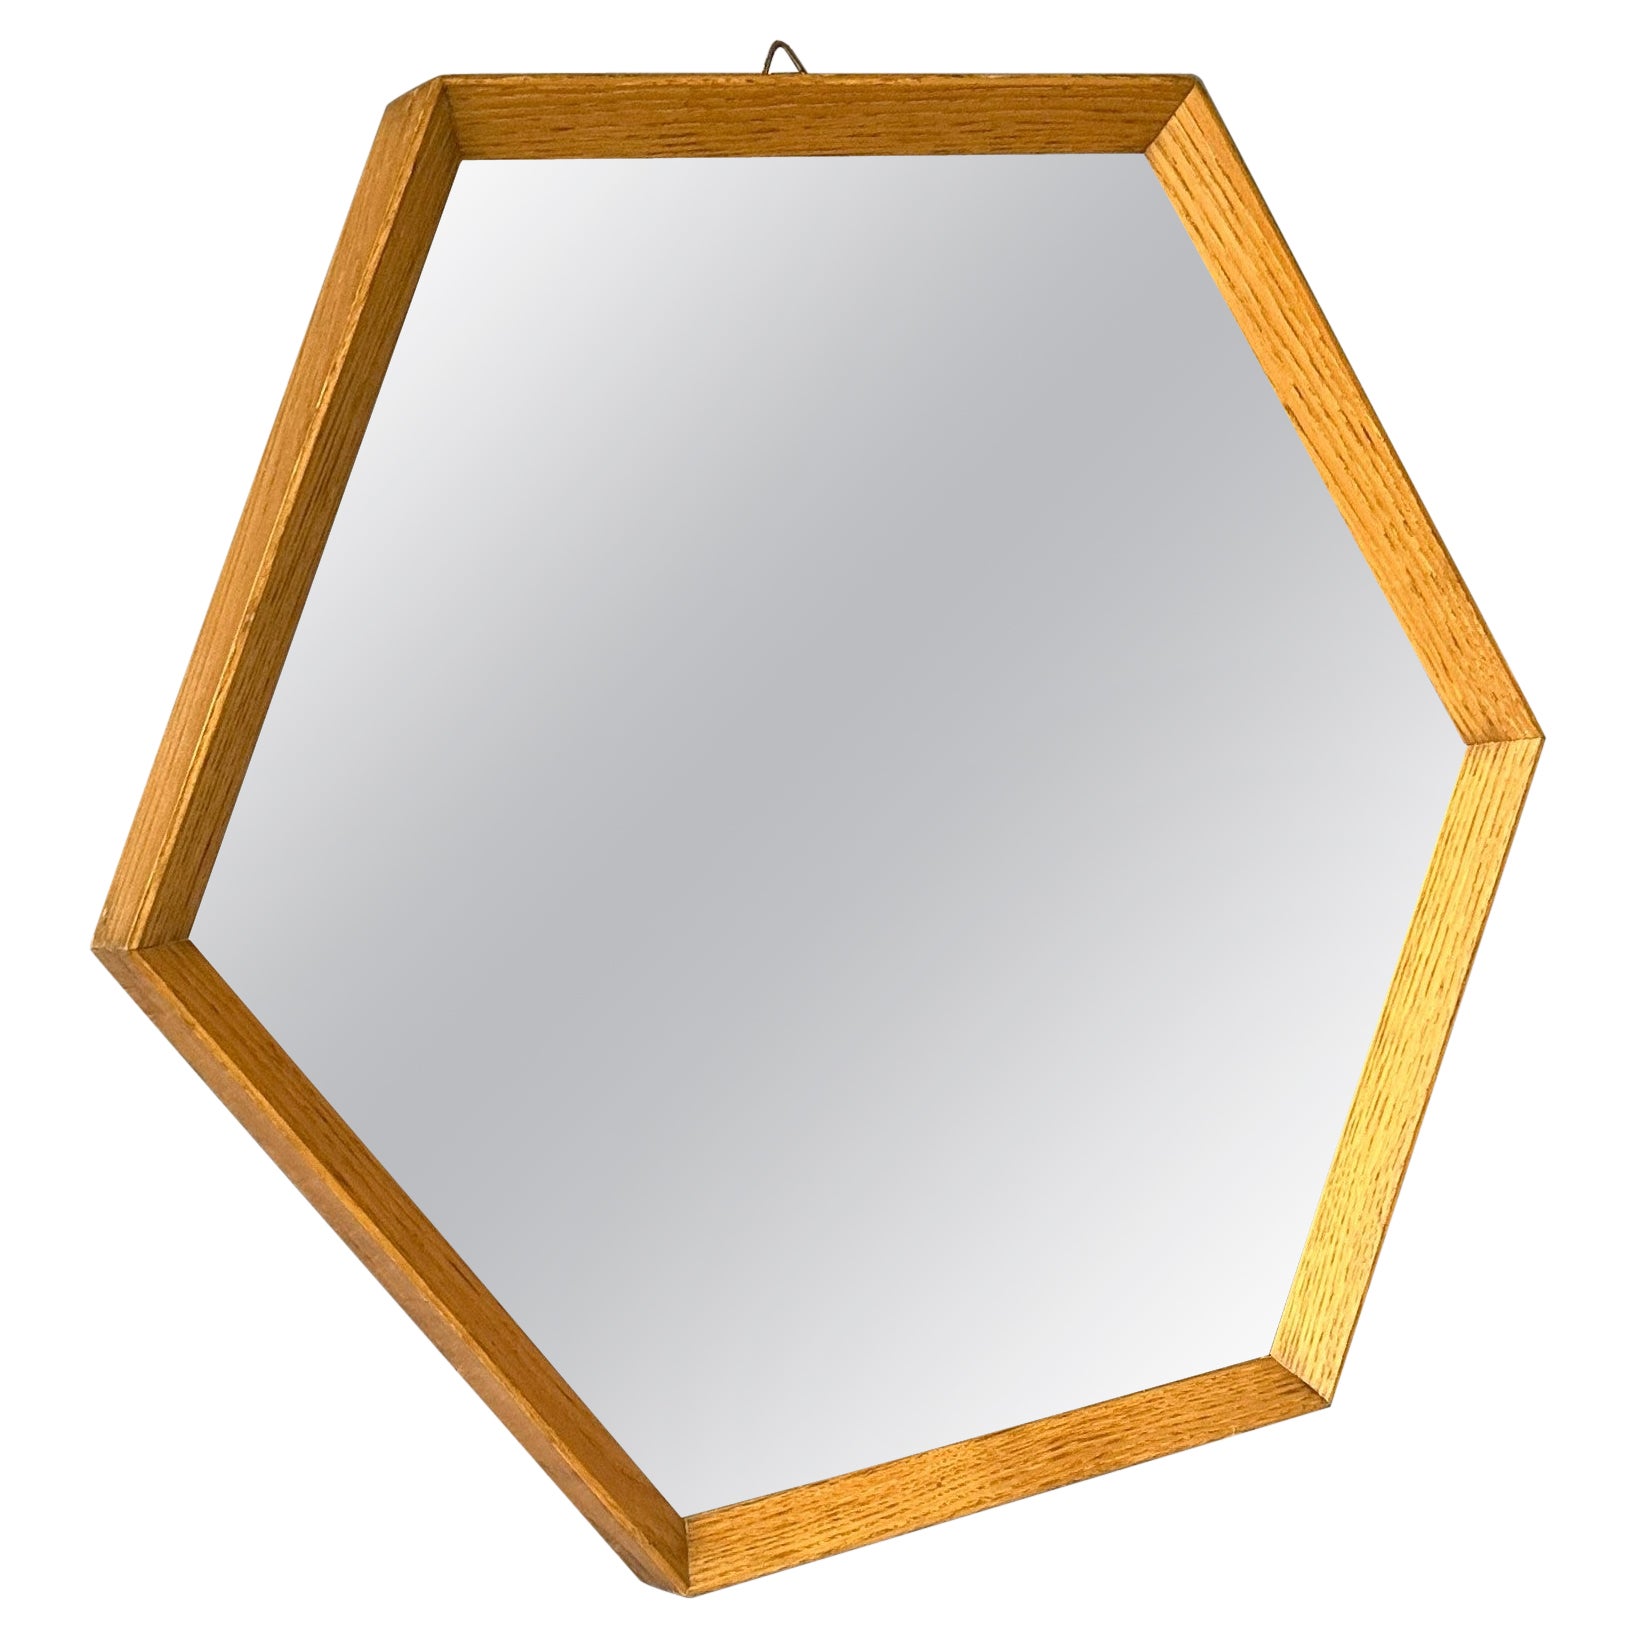 Mid-Century Modern hexagonal Mirror with oak wood frame 1960 Italian manufacture